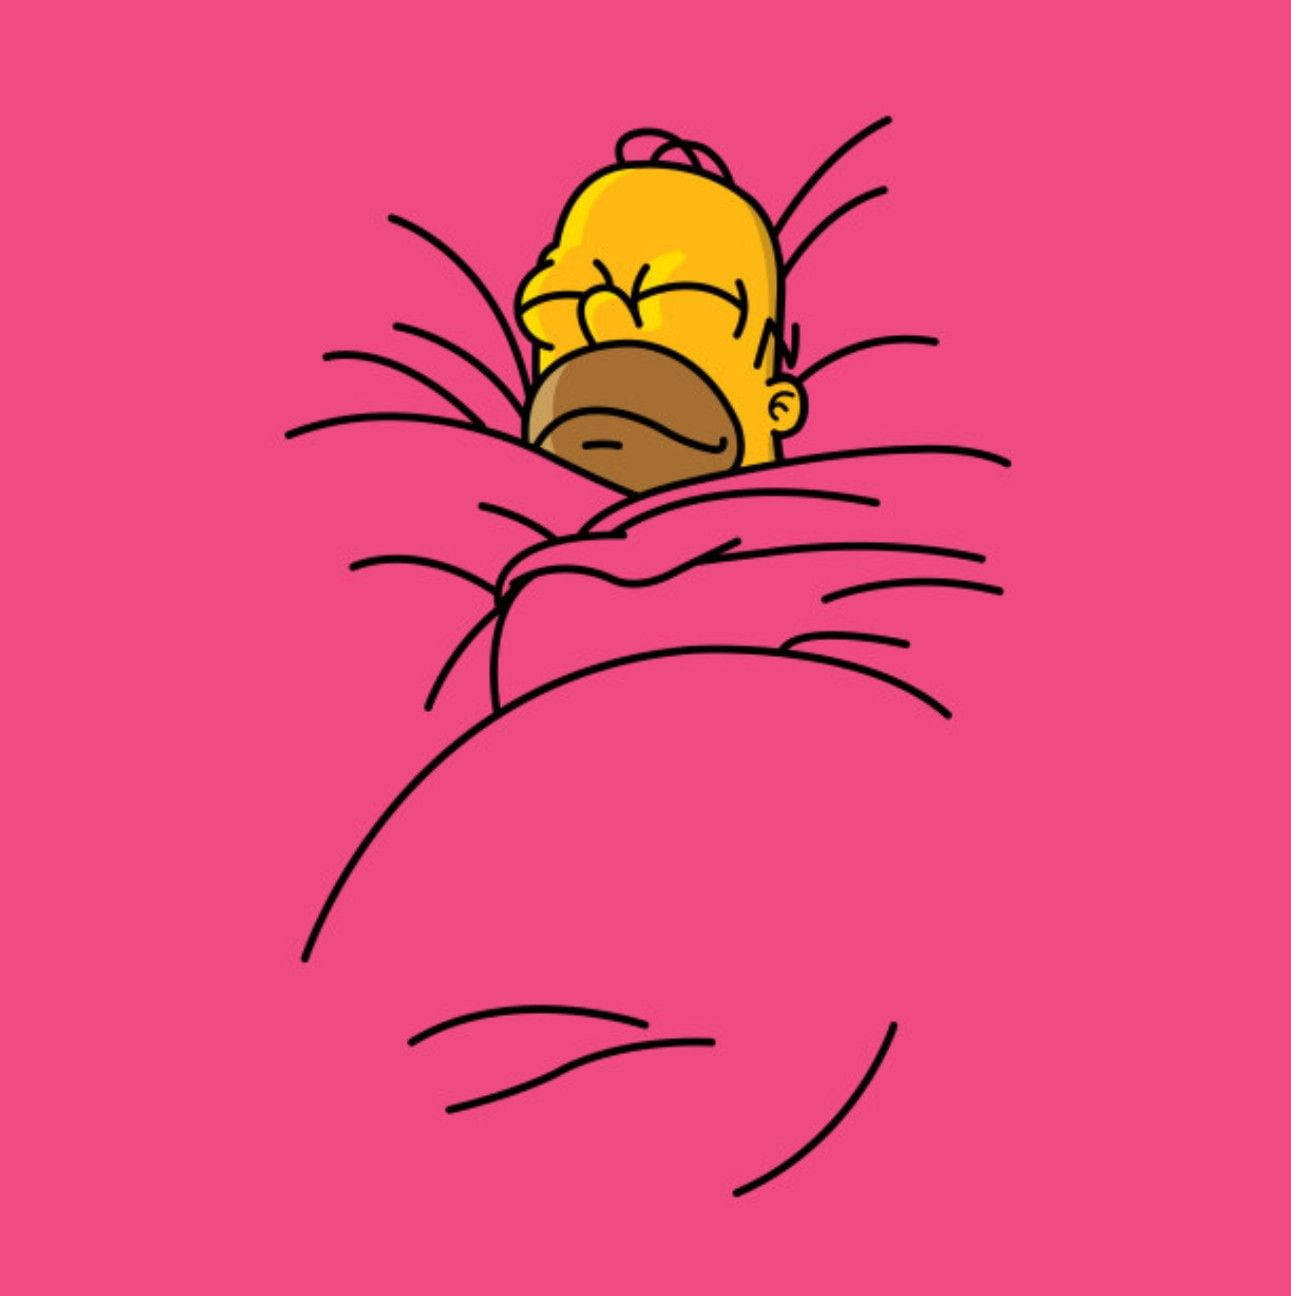 Sleeping Homer Simpson